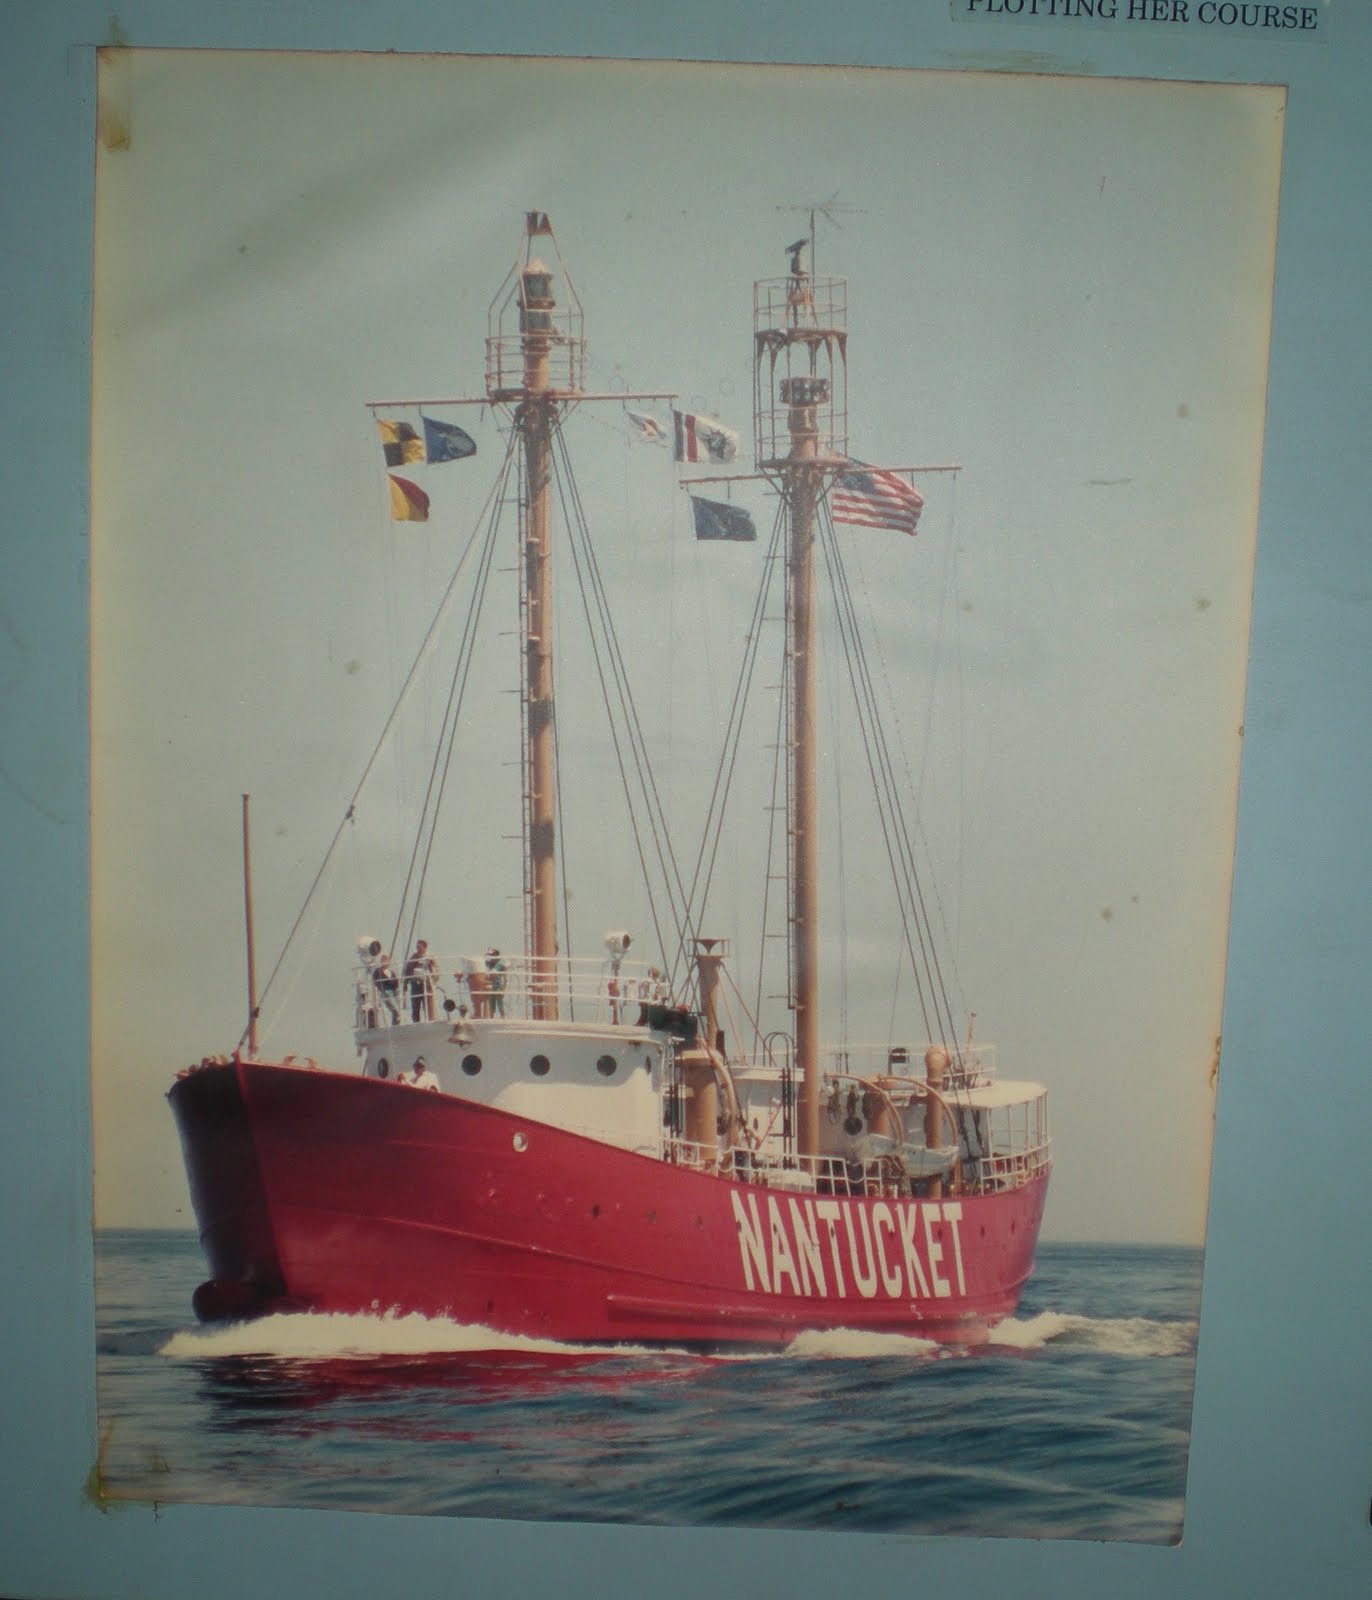 LV 112 Nantucket Lightship, Tiny Ships Sandbox Wiki